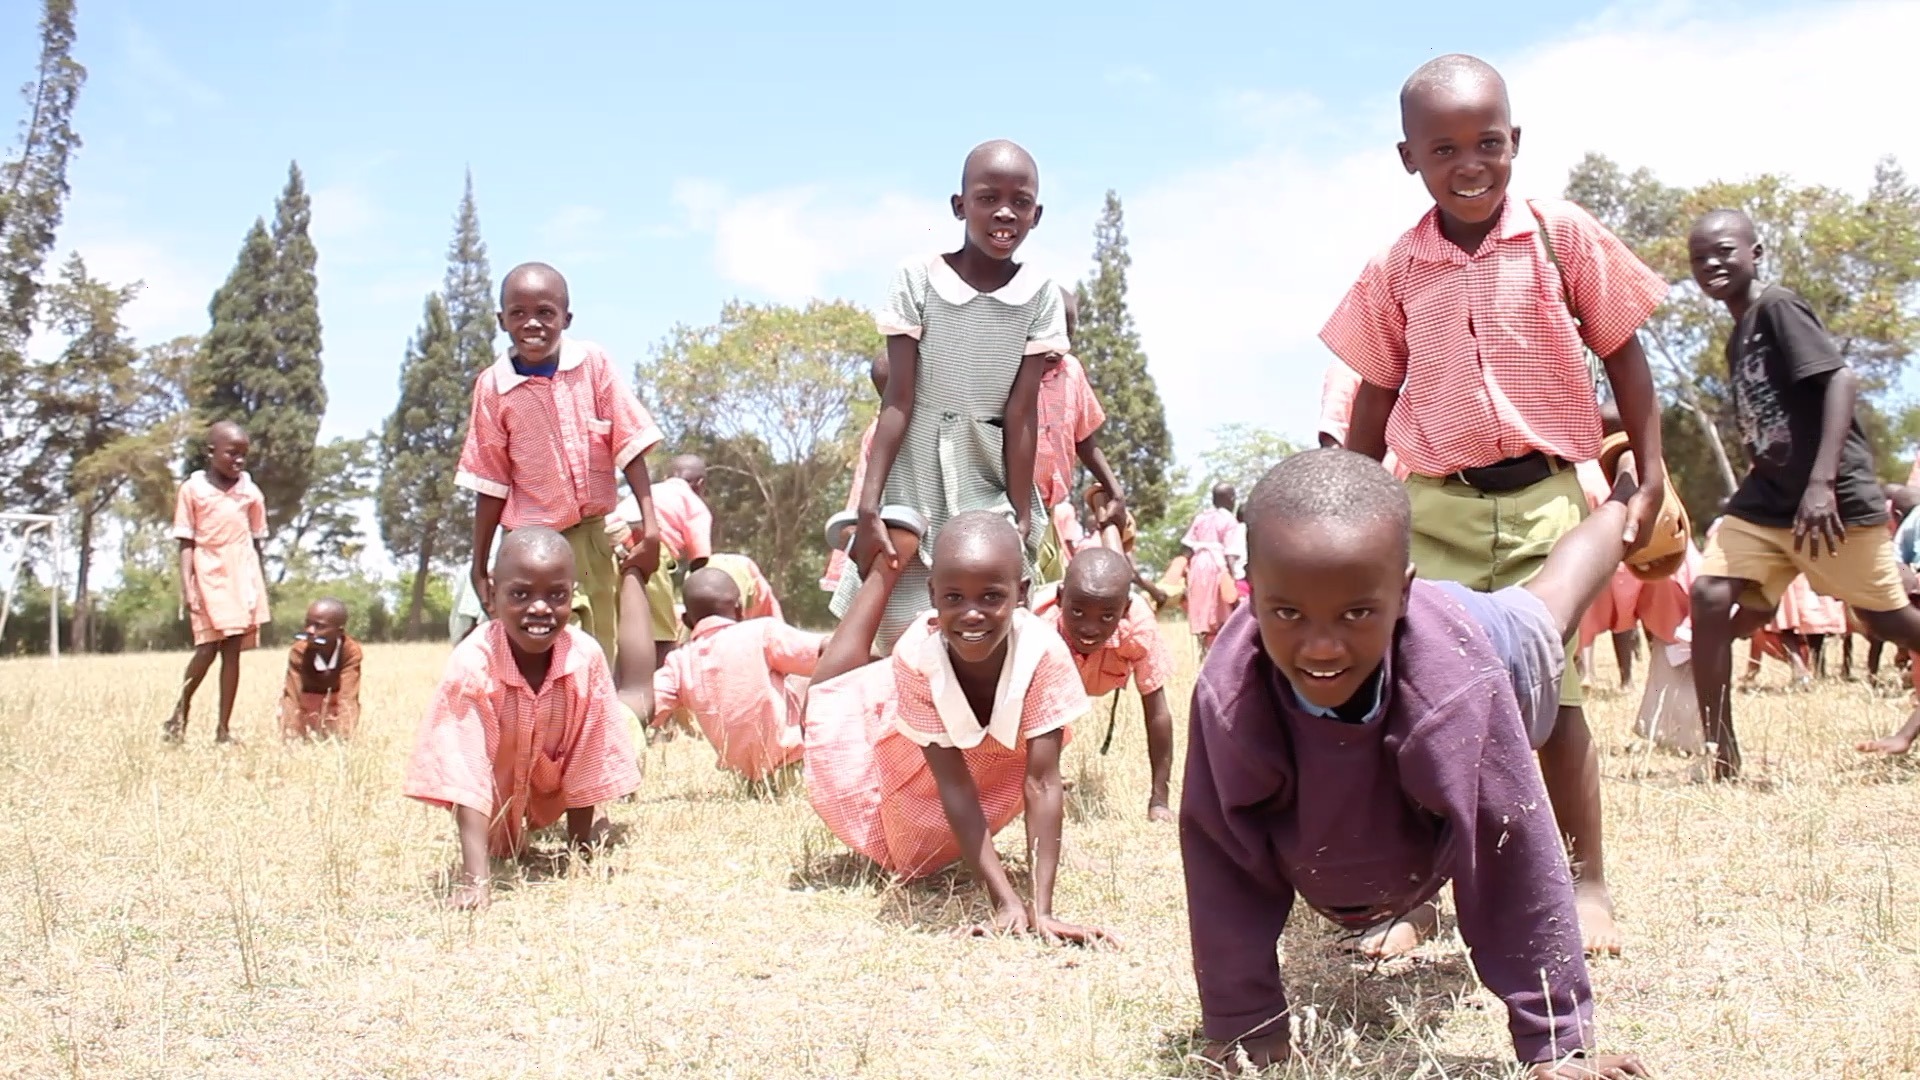 Children at AIDS orphanage in Kenya playing.